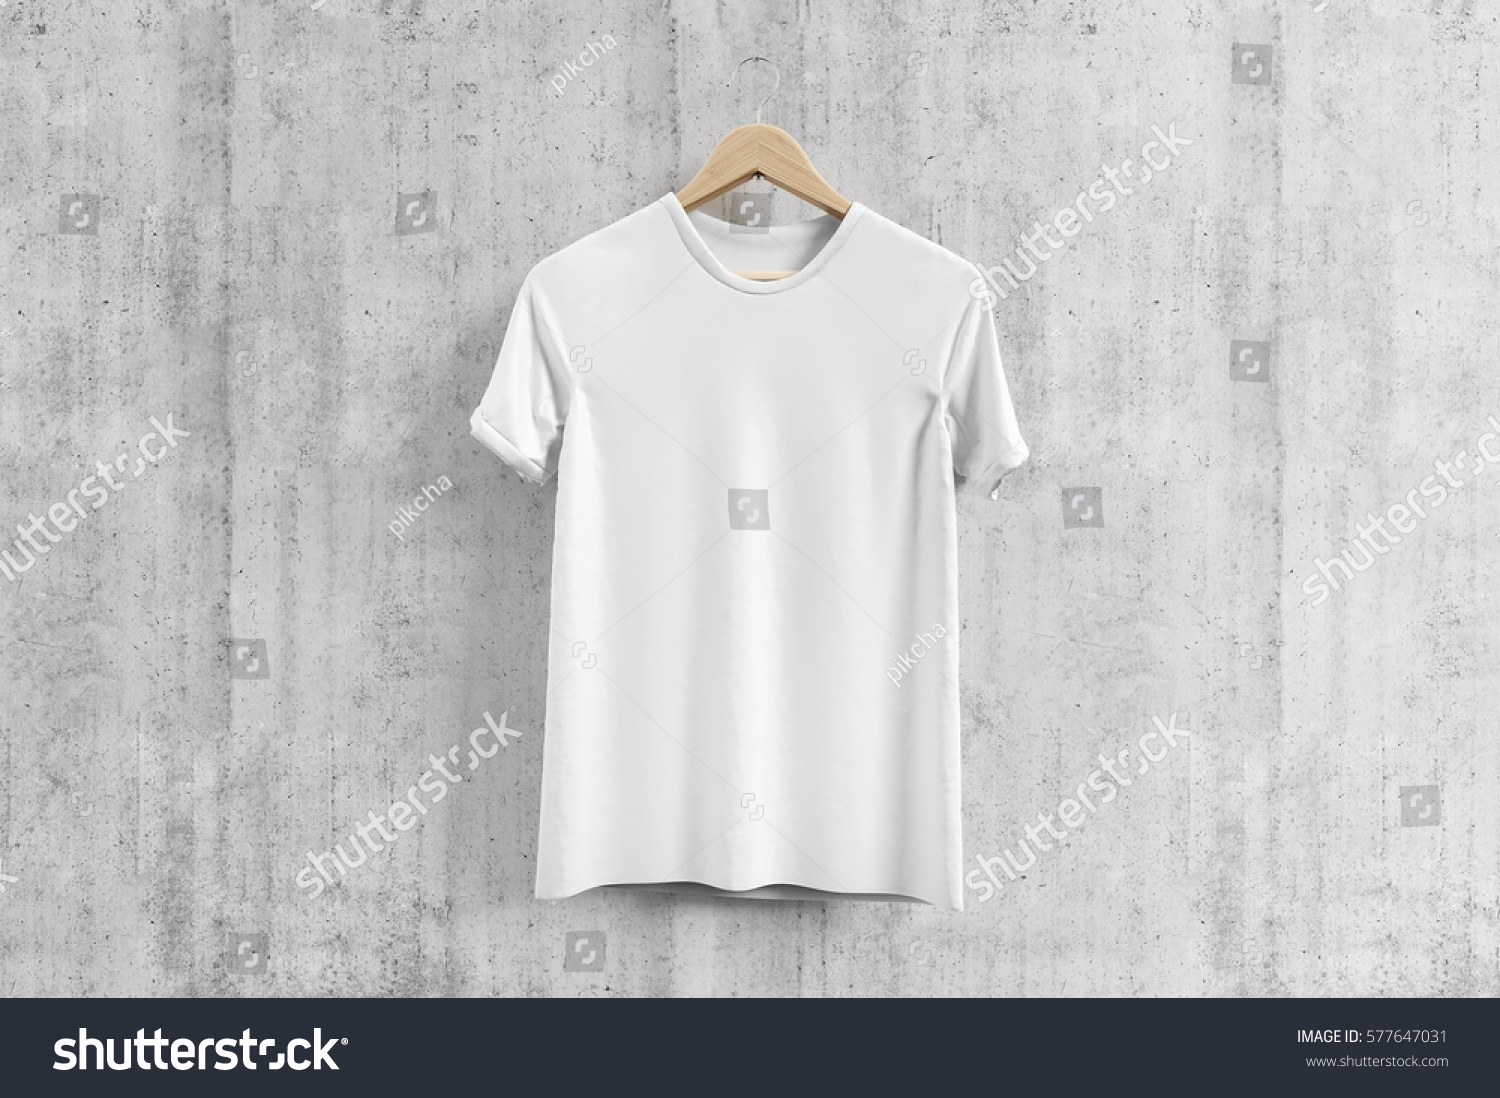 Download Tshirt Mockup Stock Photo 577647031 - Shutterstock